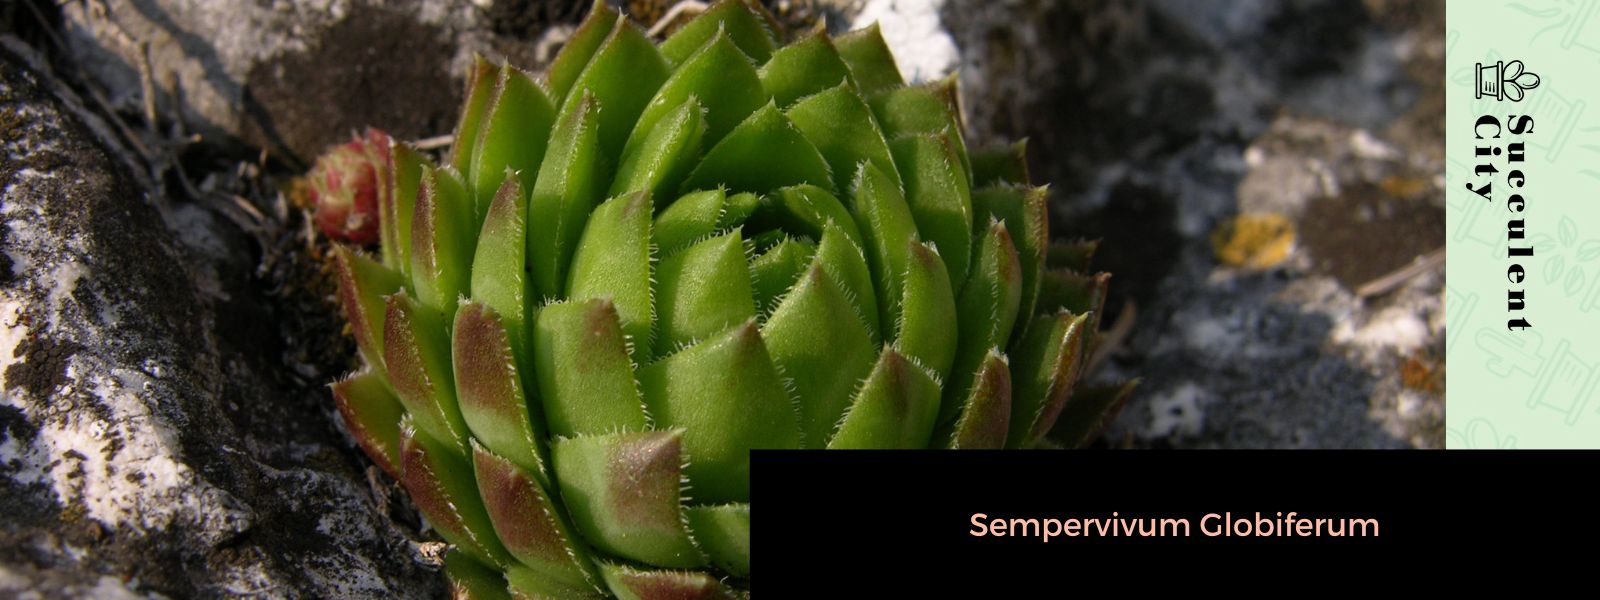 Sempervivum Globiferum (La siempreviva esférica)